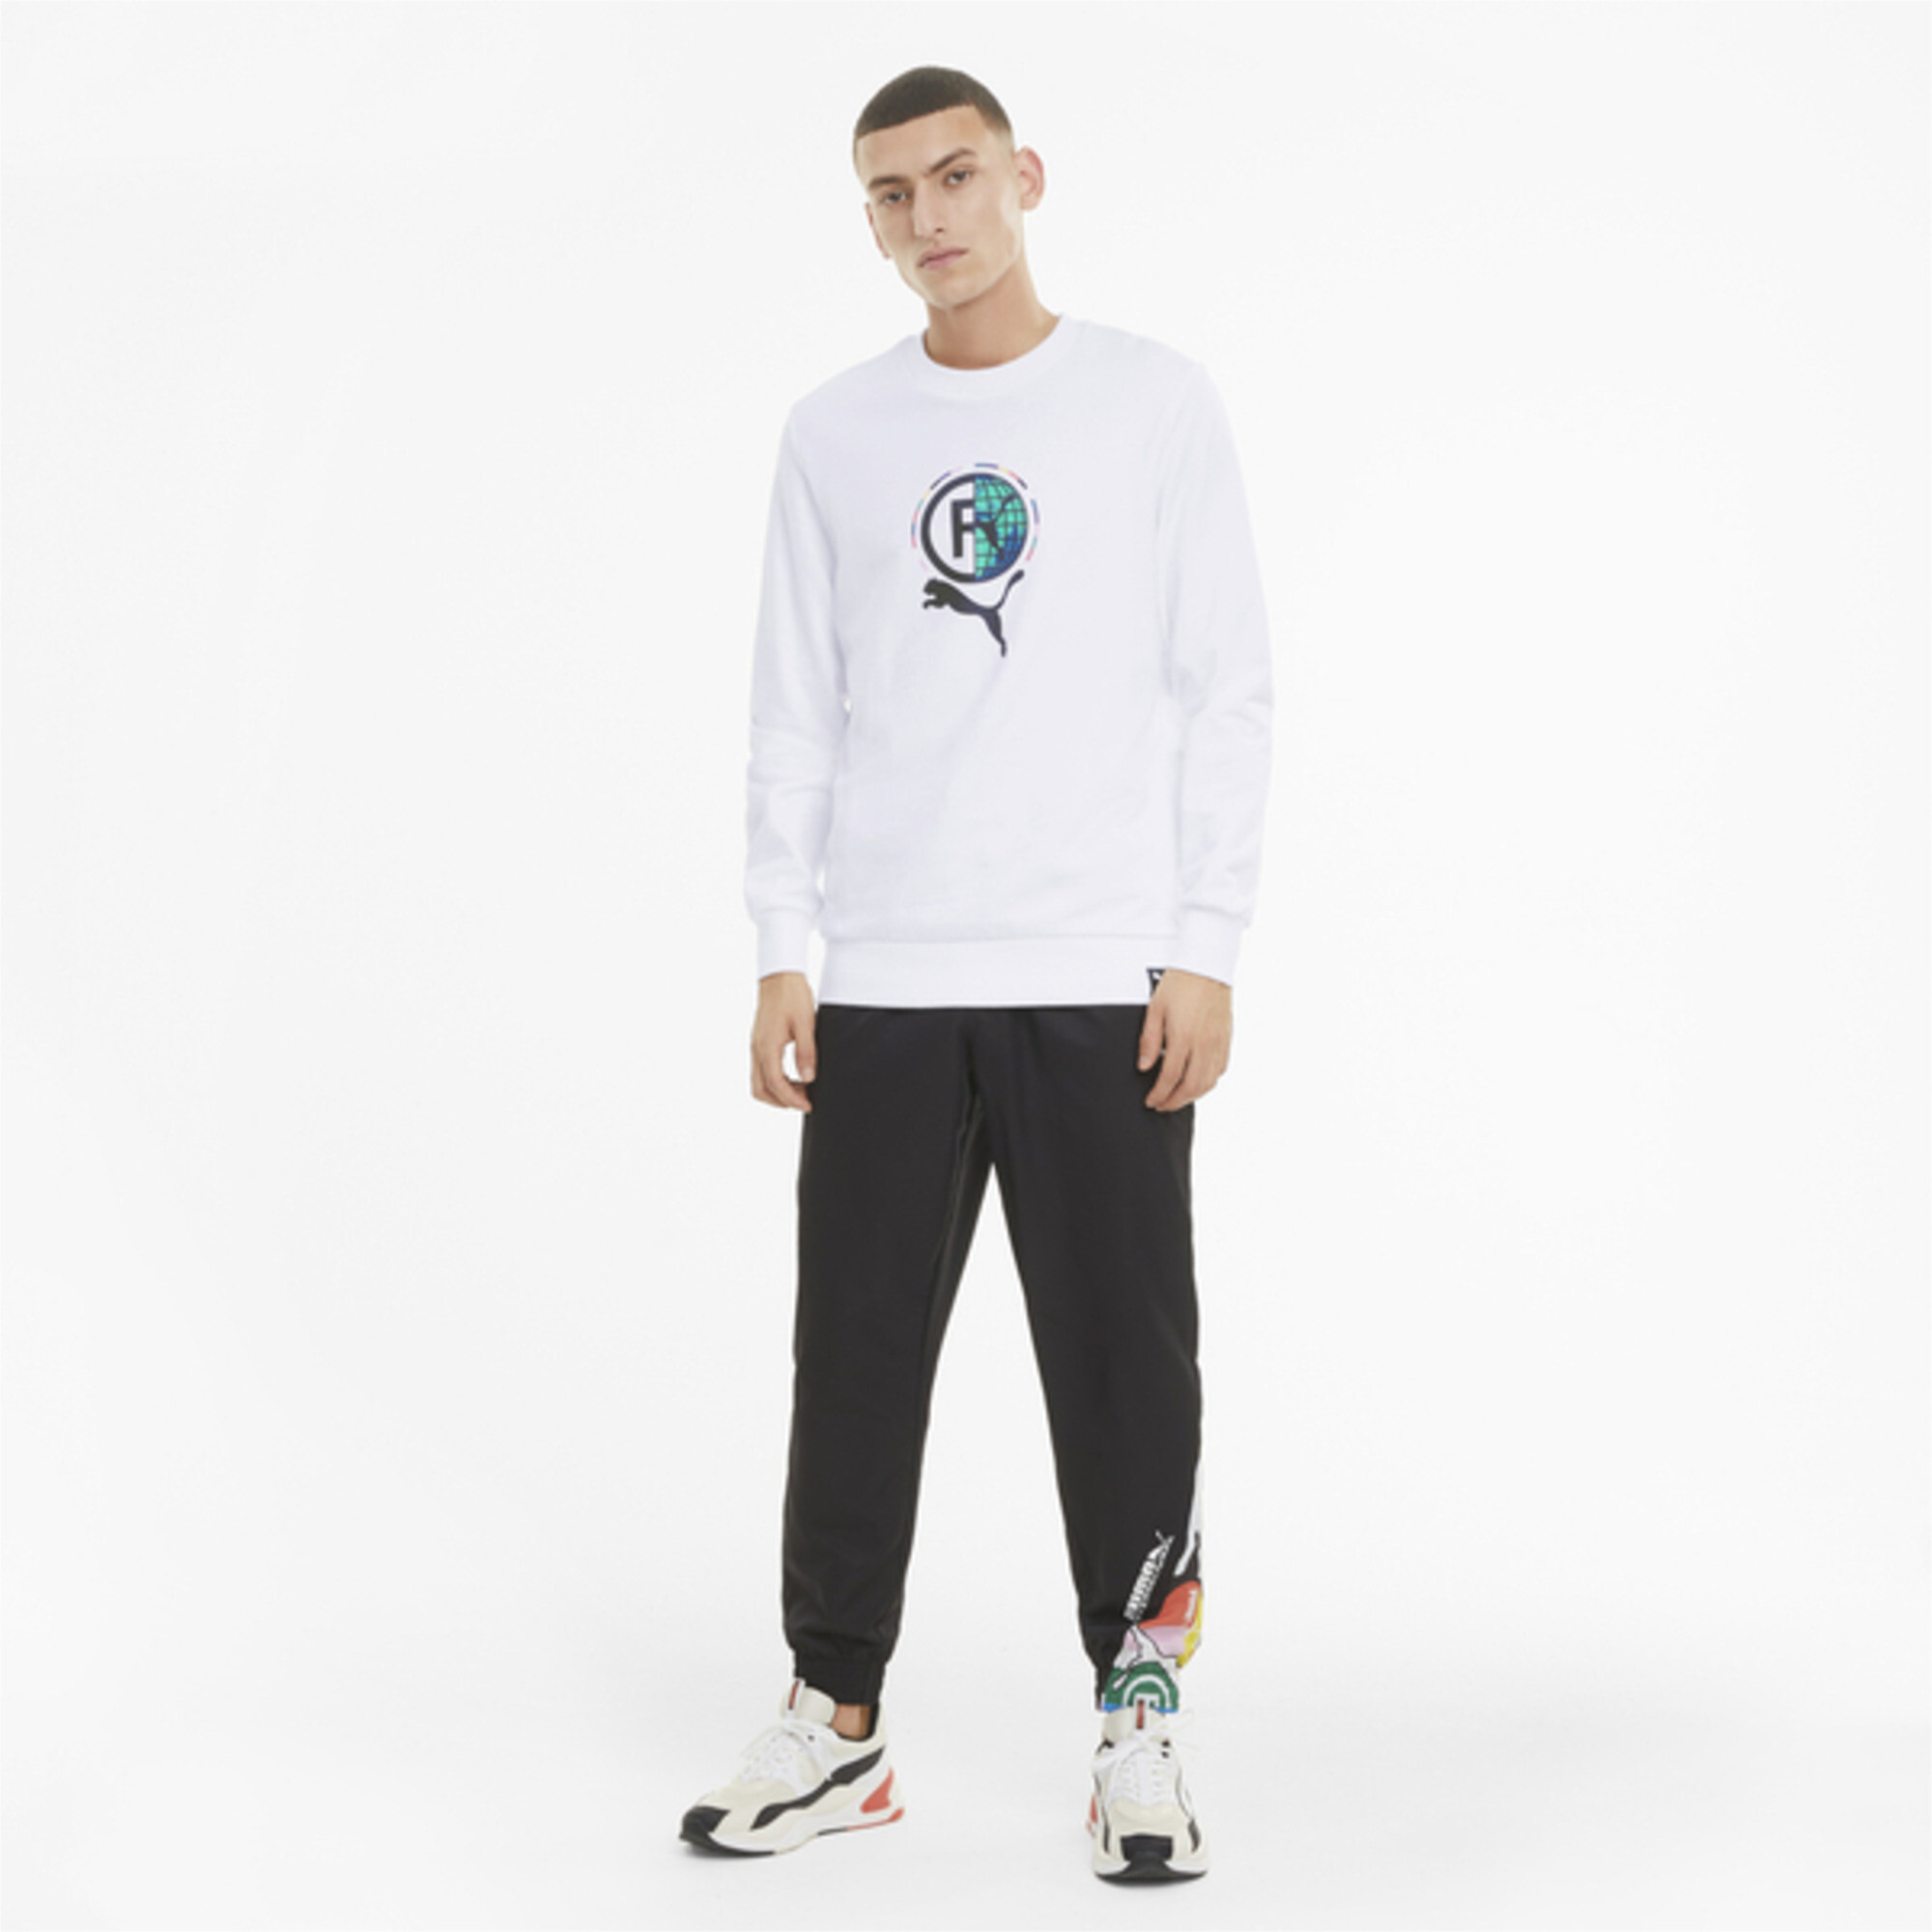 Men's PUMA INTL Game Graphic Crewneck Sweatshirt In 20 - White, Size XS